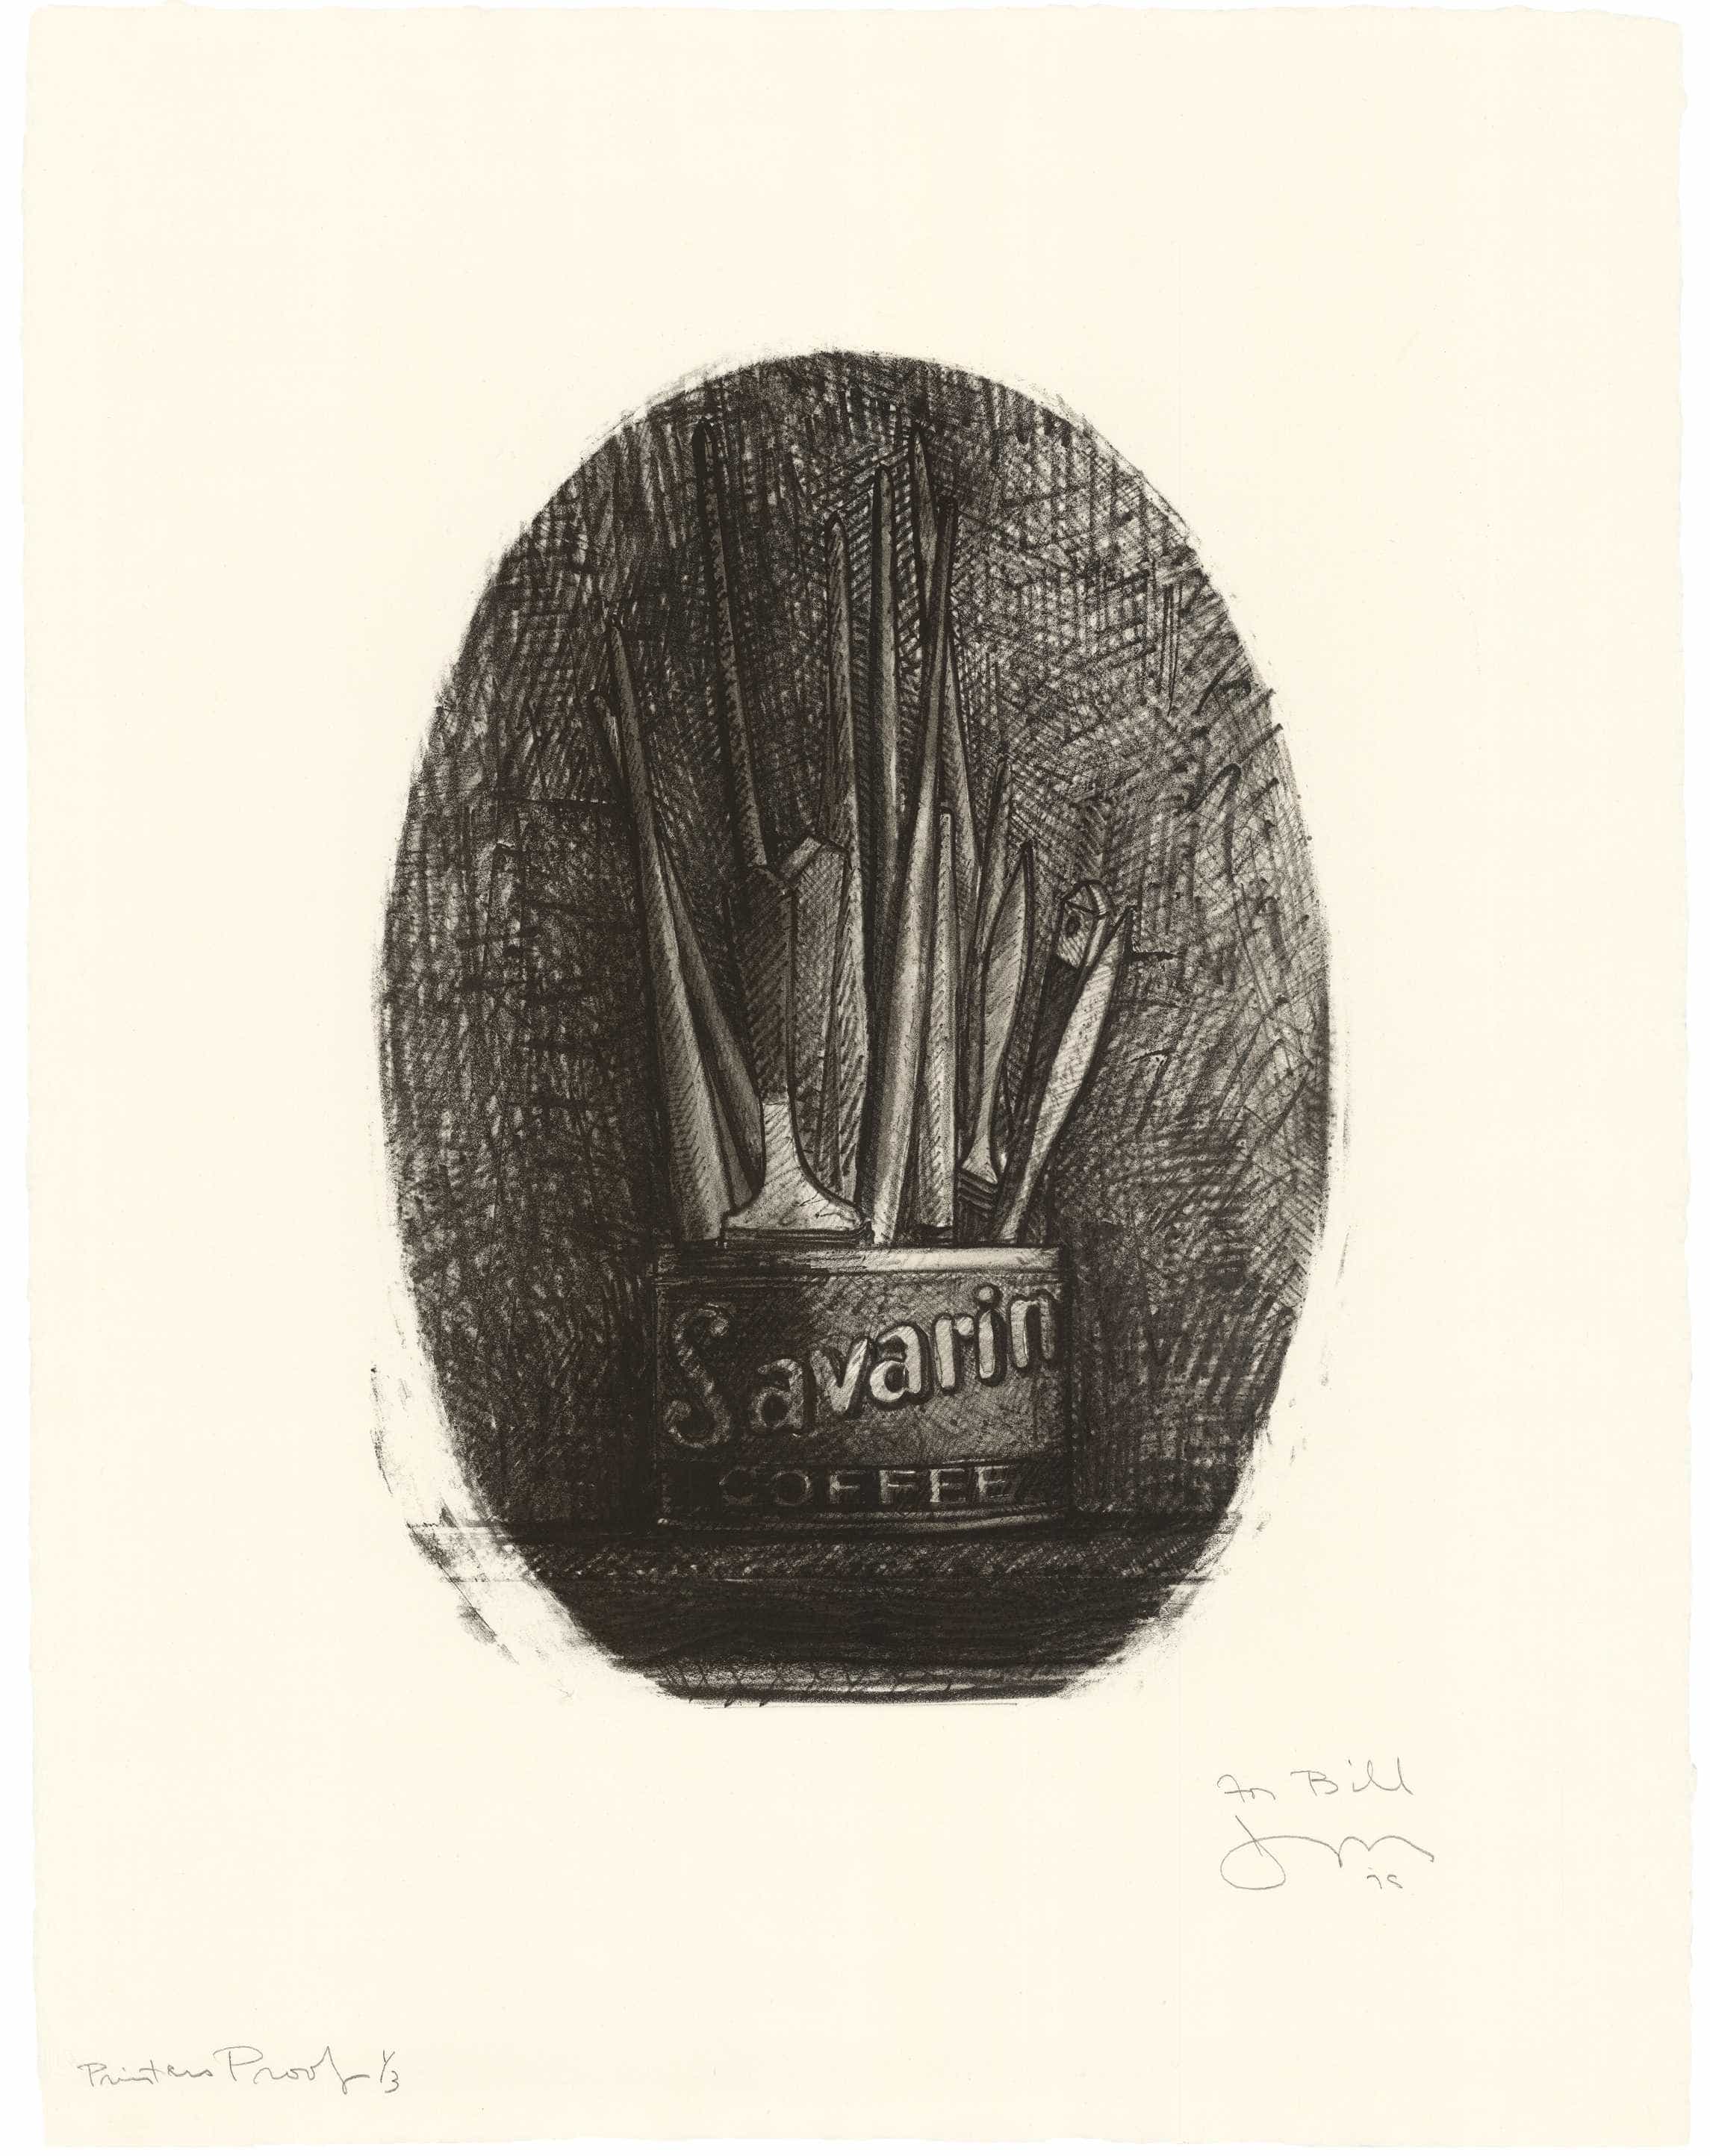 Jasper Johns, Savarin 4 (Oval), 1978